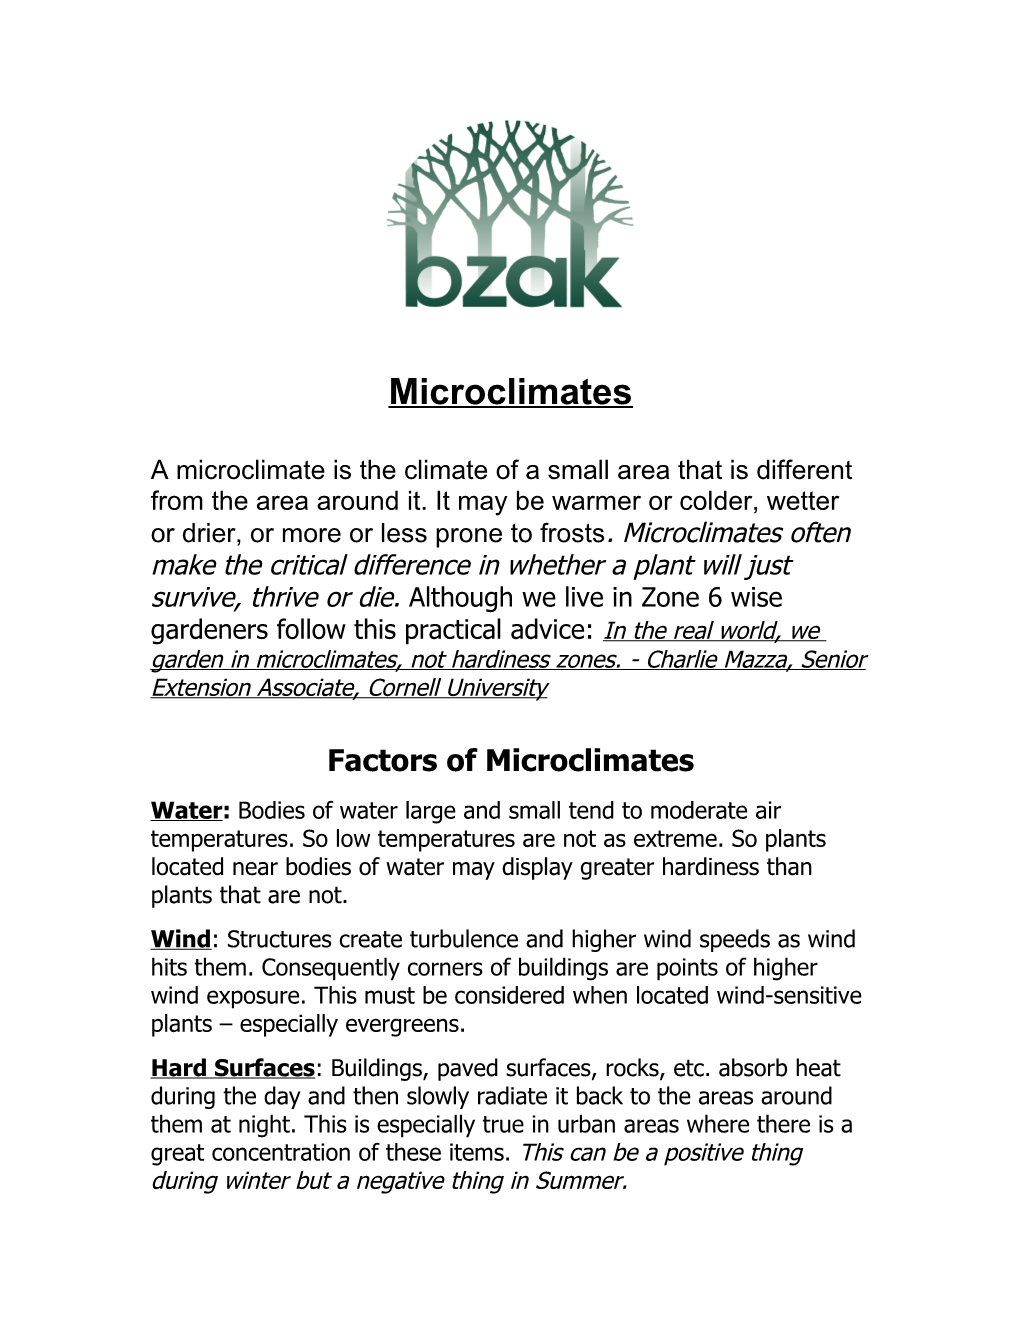 Factors of Microclimates